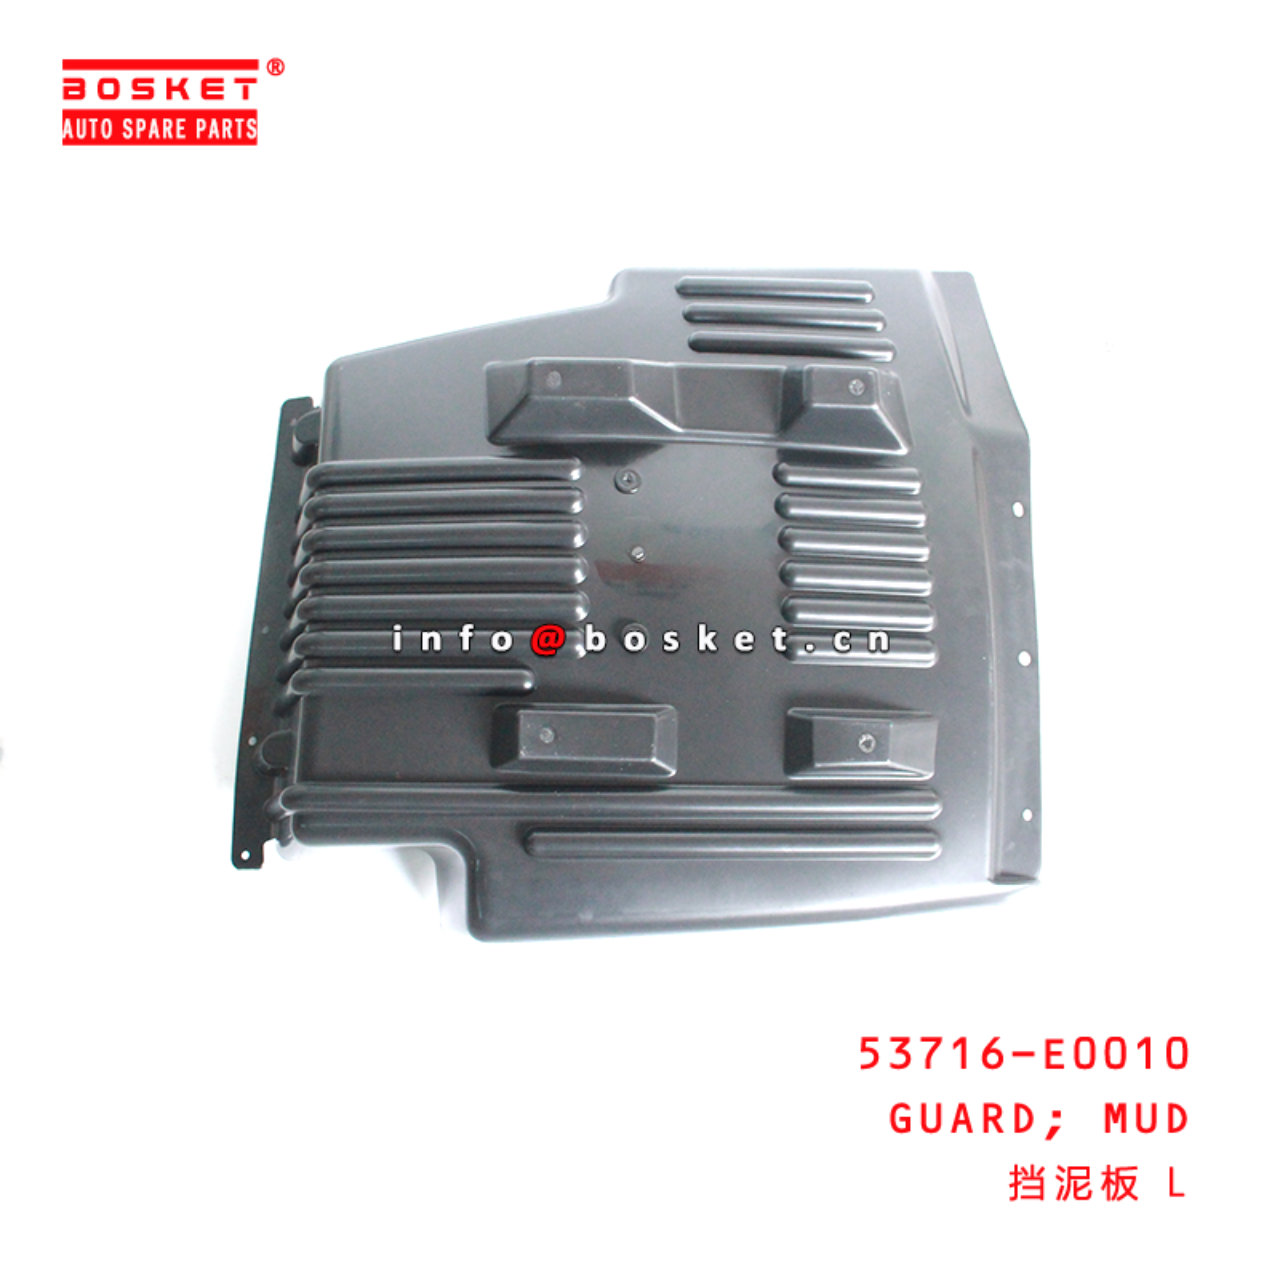 53716-E0010 Mud Guard Suitable for ISUZU HINO500